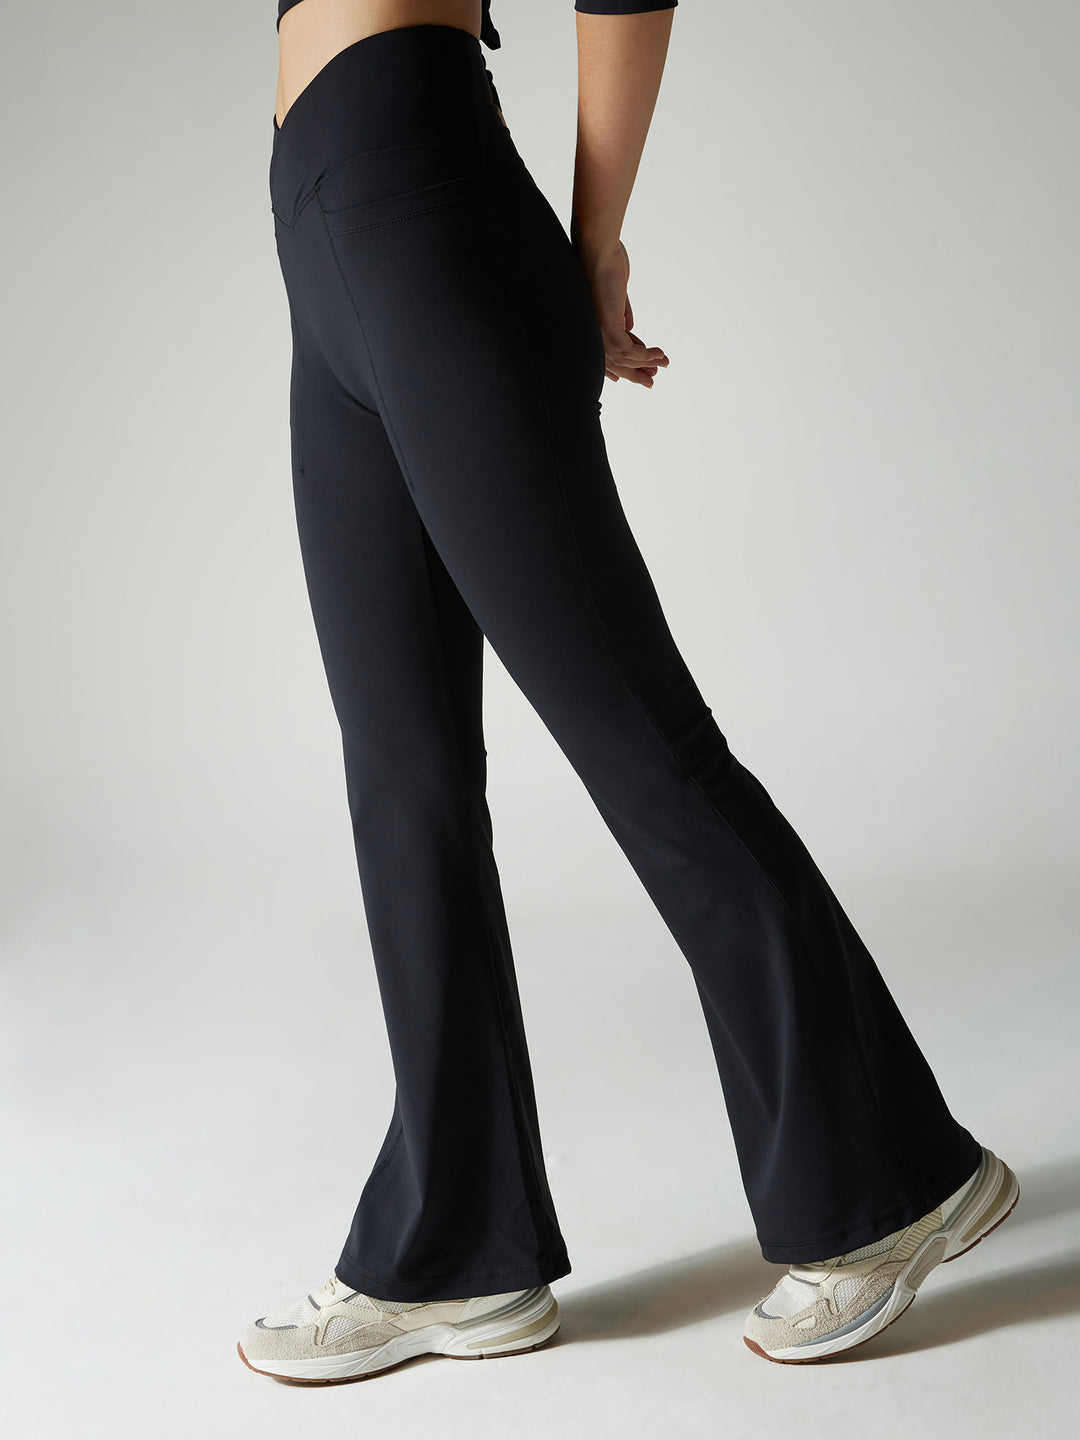 Buy Aeropostale Black Embellished Leggings for Women Online @ Tata CLiQ